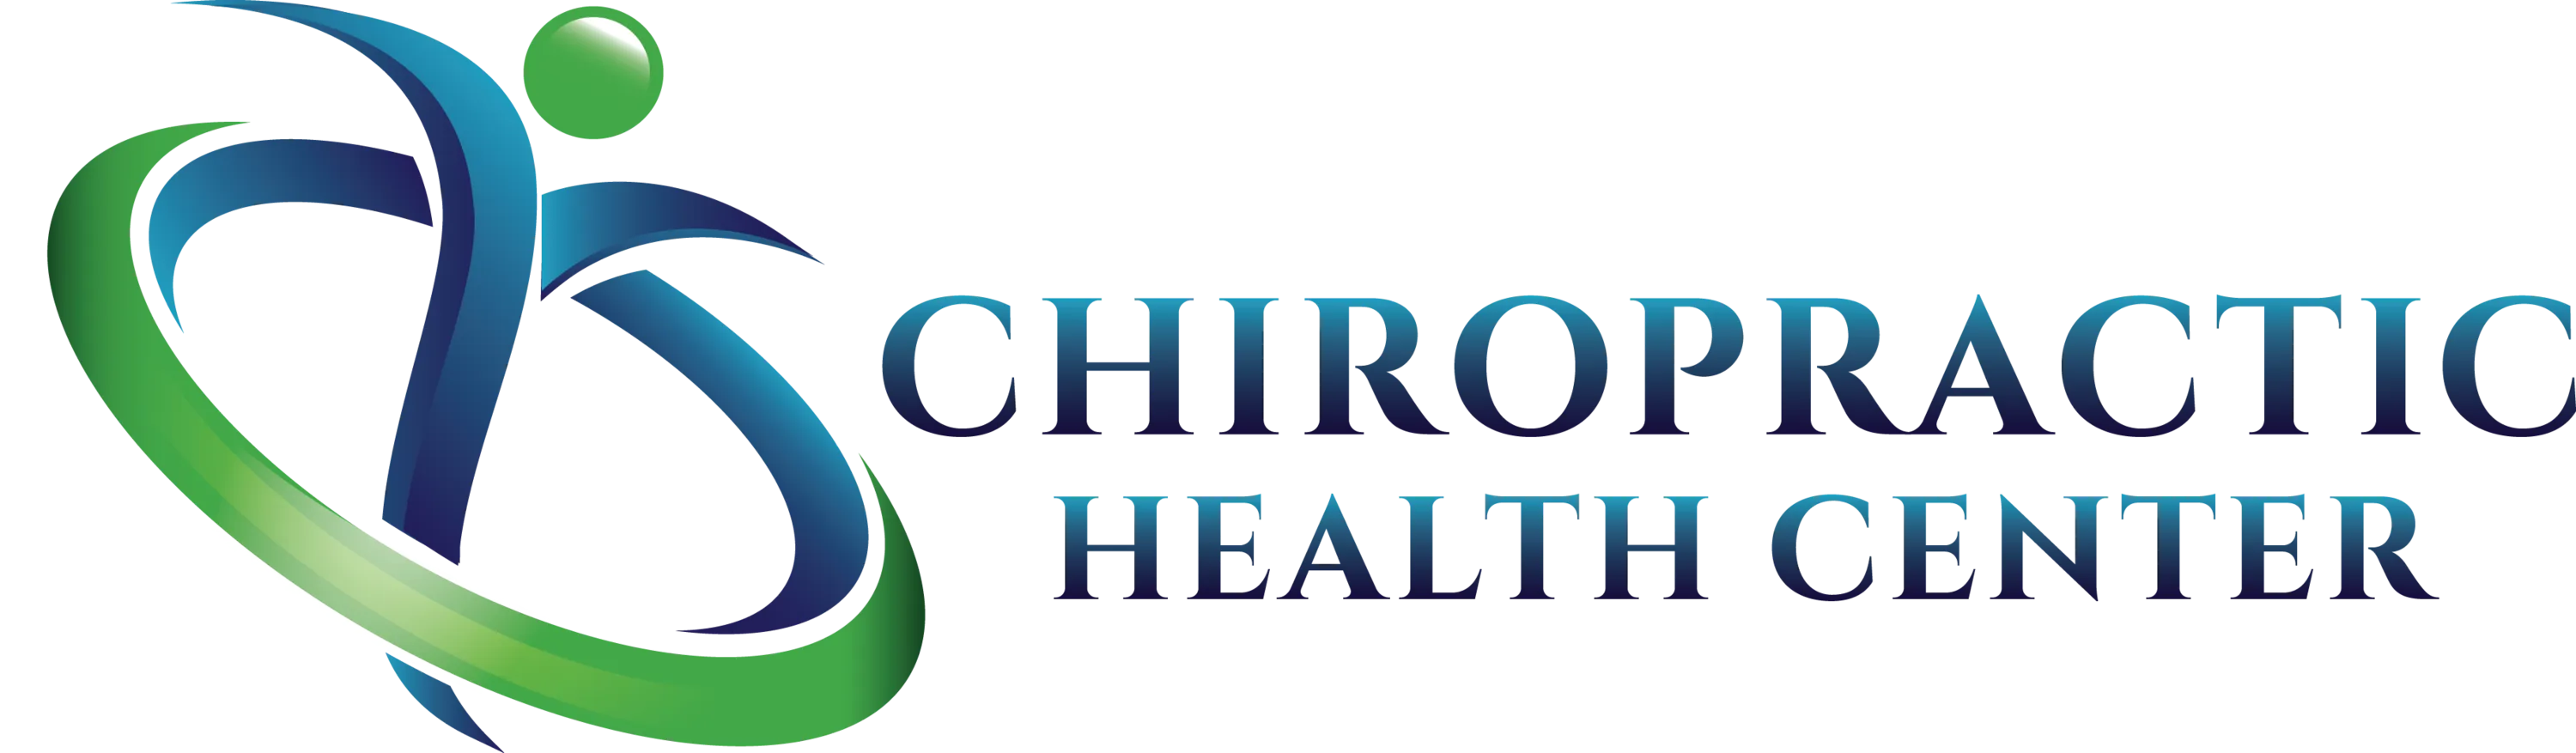 Chiropractic Health Center - Chiropractor in Le Sueur, MN US